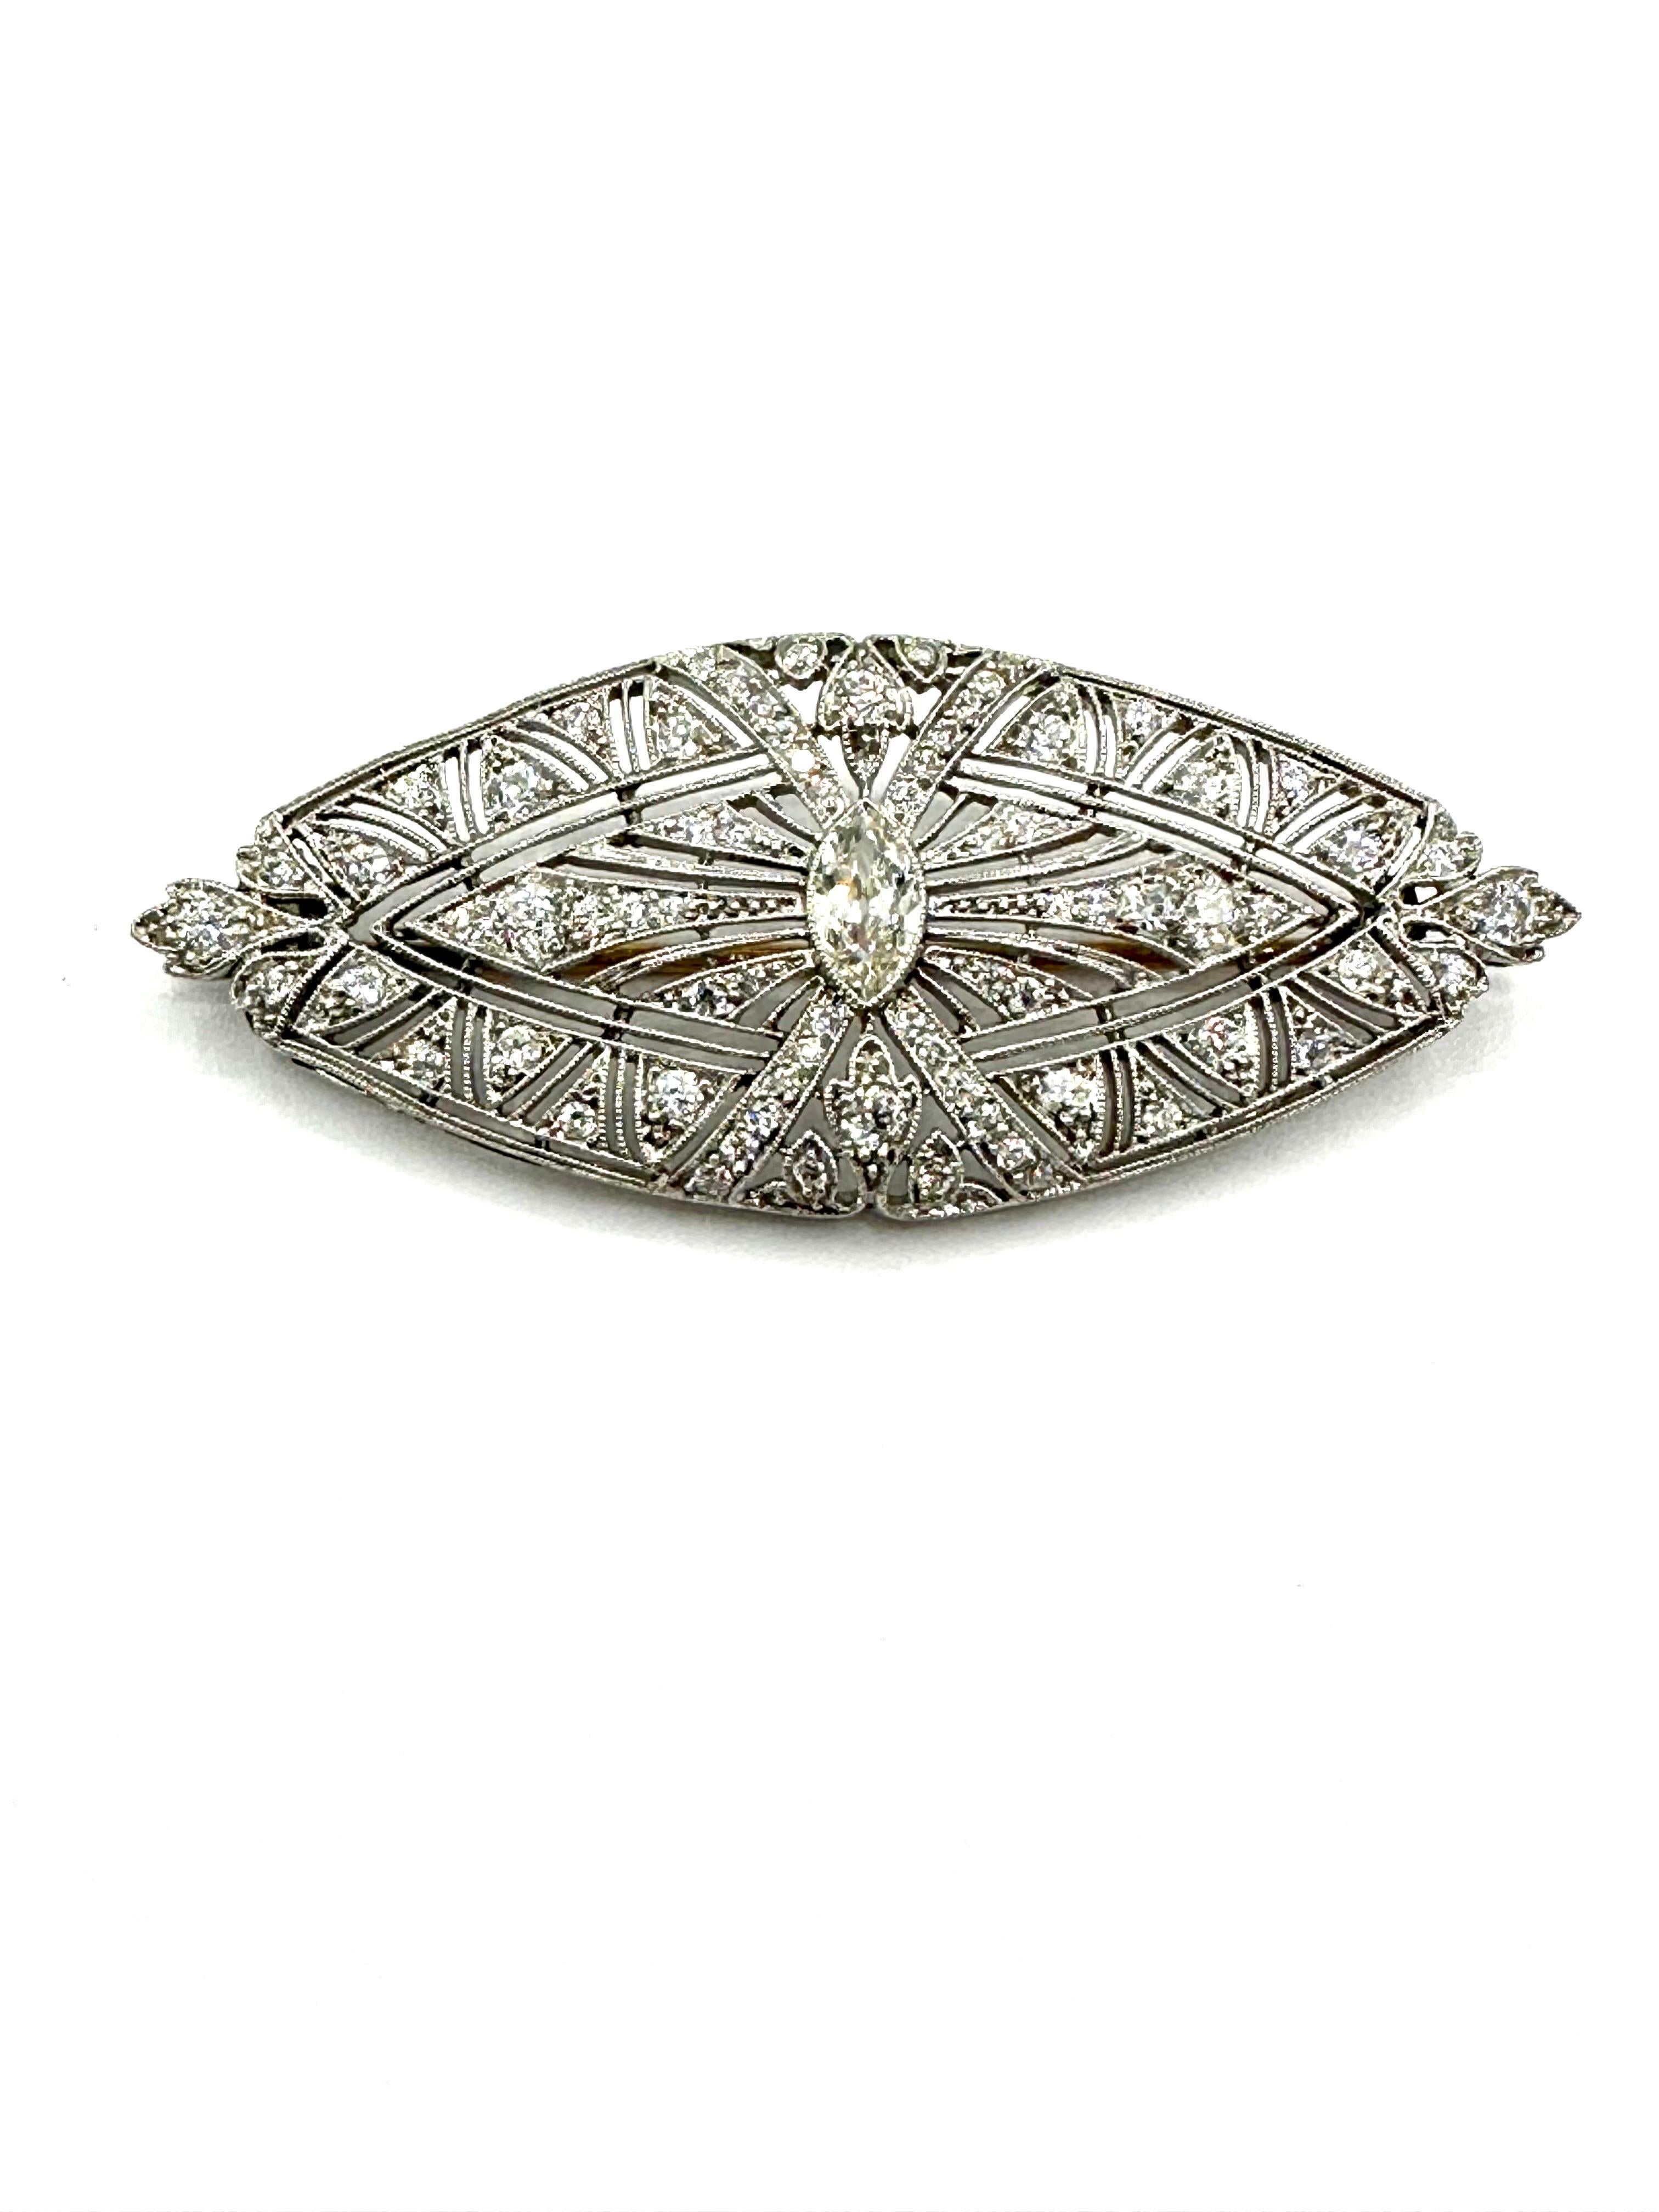 Marquise Cut Art Deco 1.59 Carat Diamond Platinum Brooch For Sale